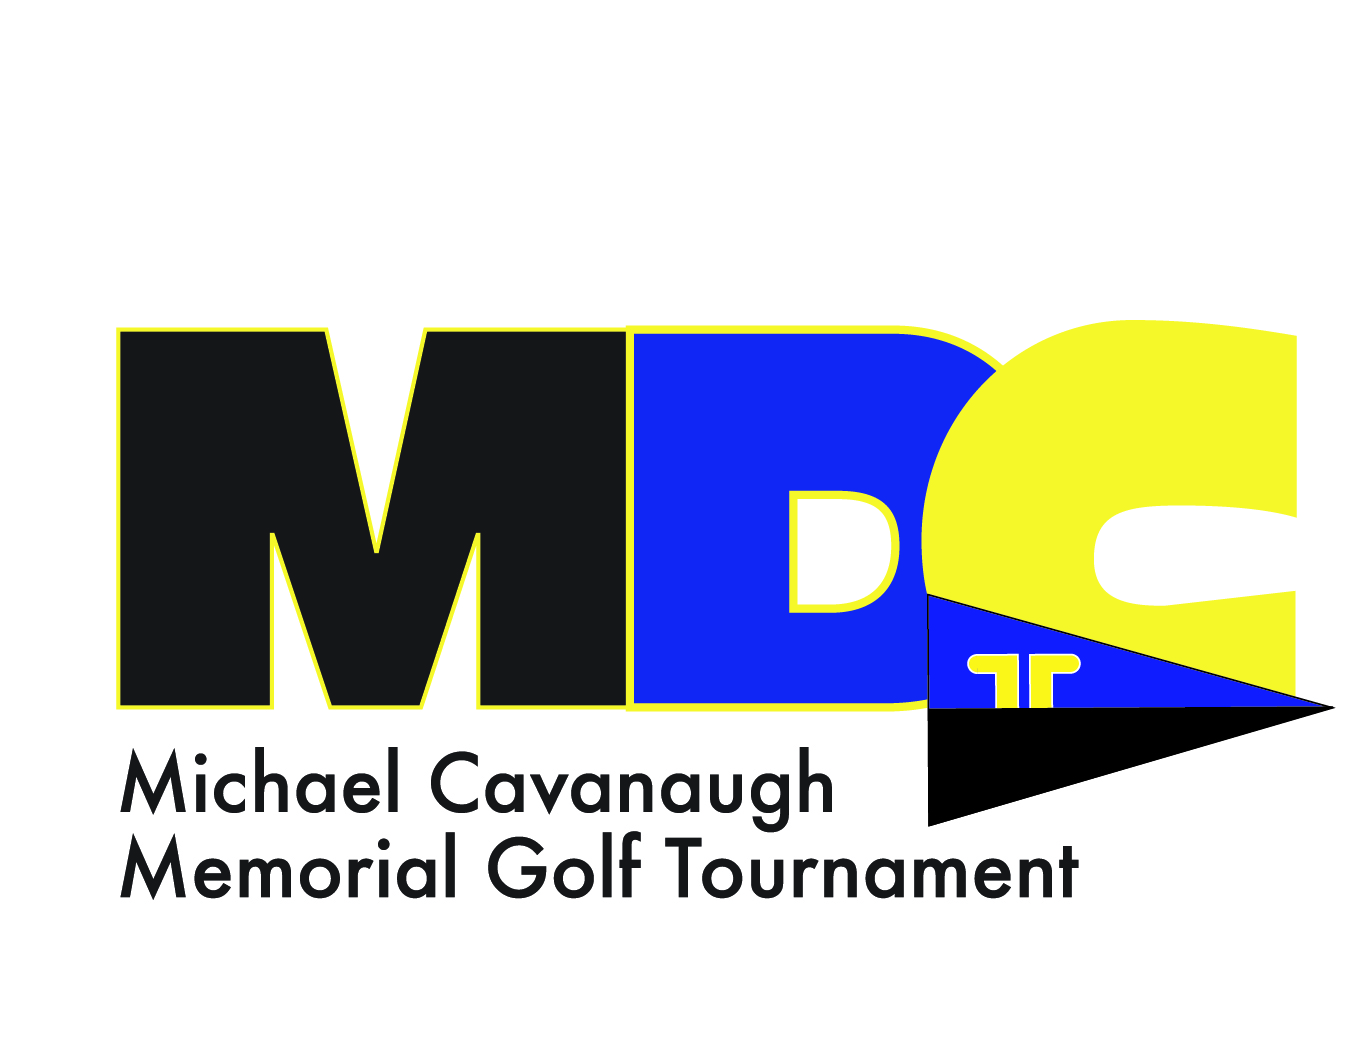 Michael Cavanaugh Memorial Golf Tournament is September 1